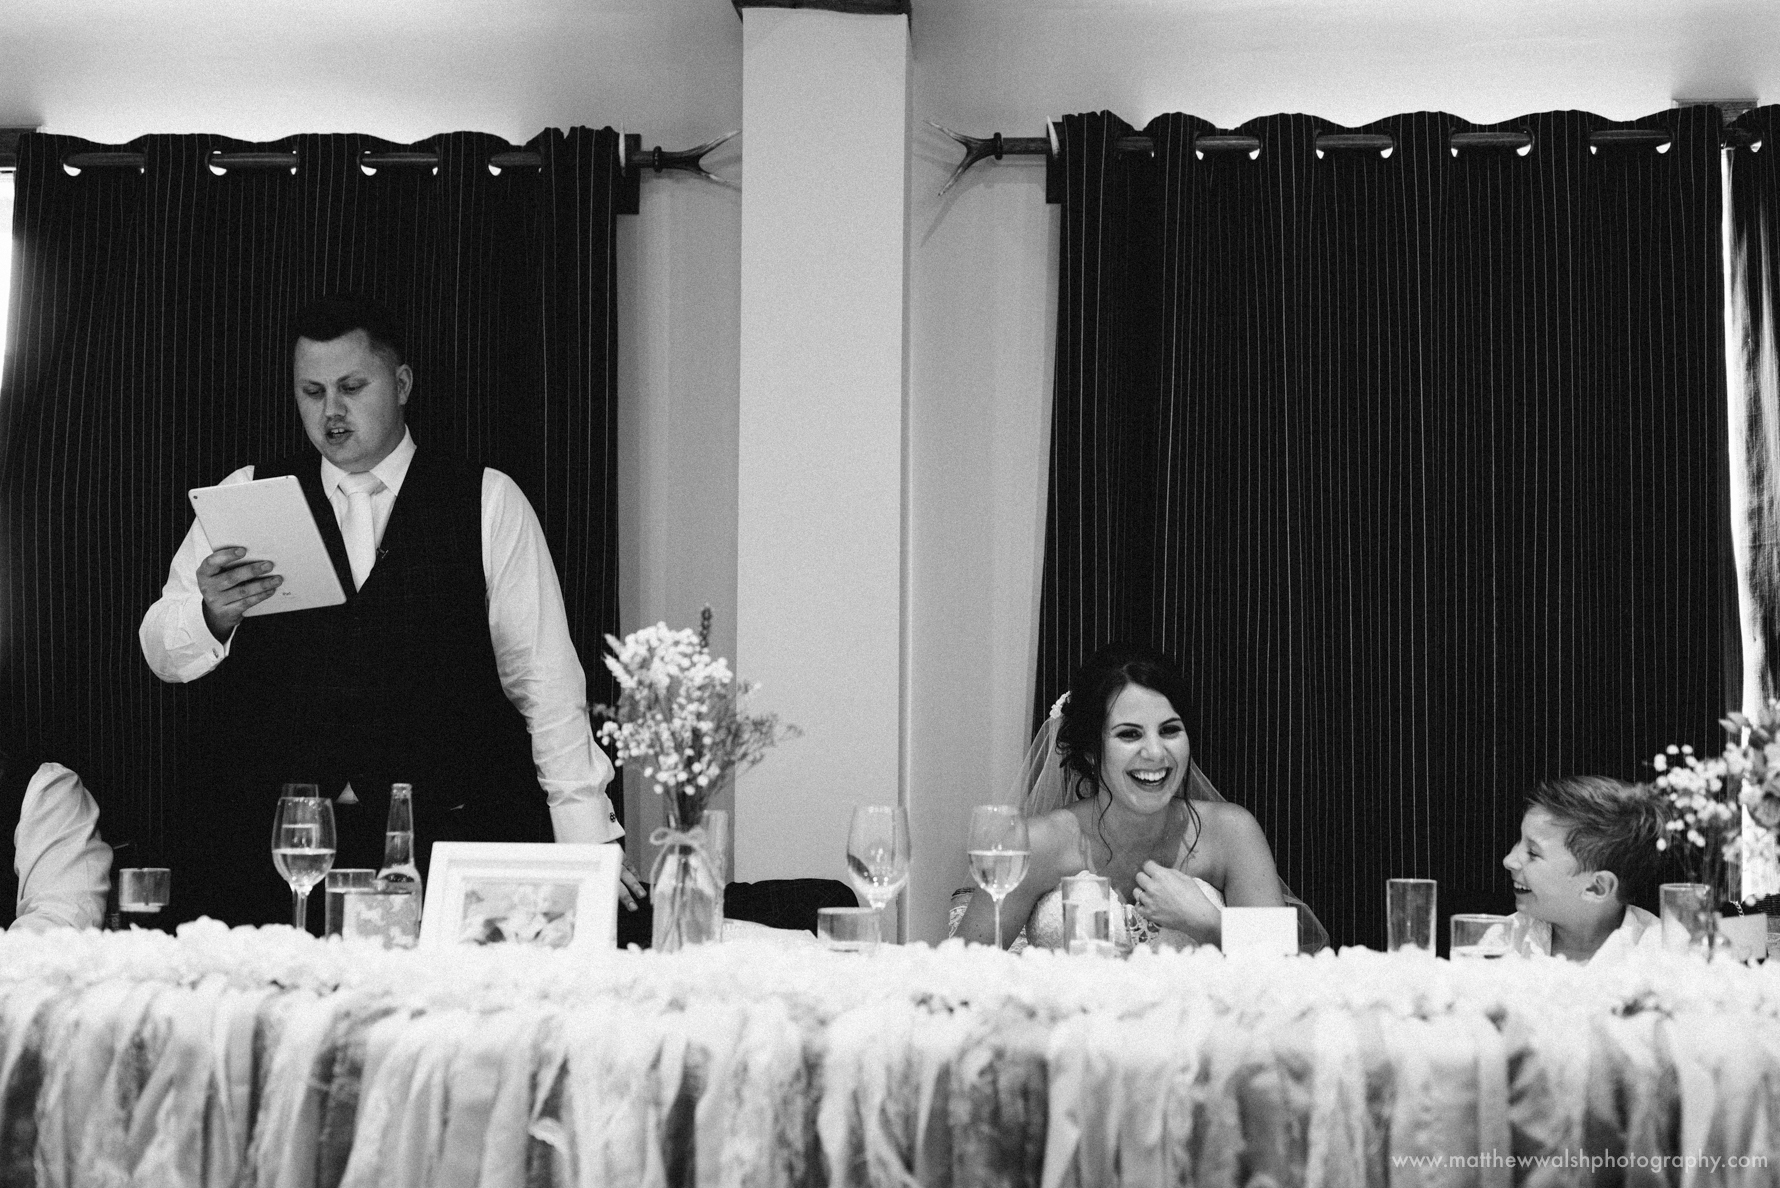 The groom making his wedding speech